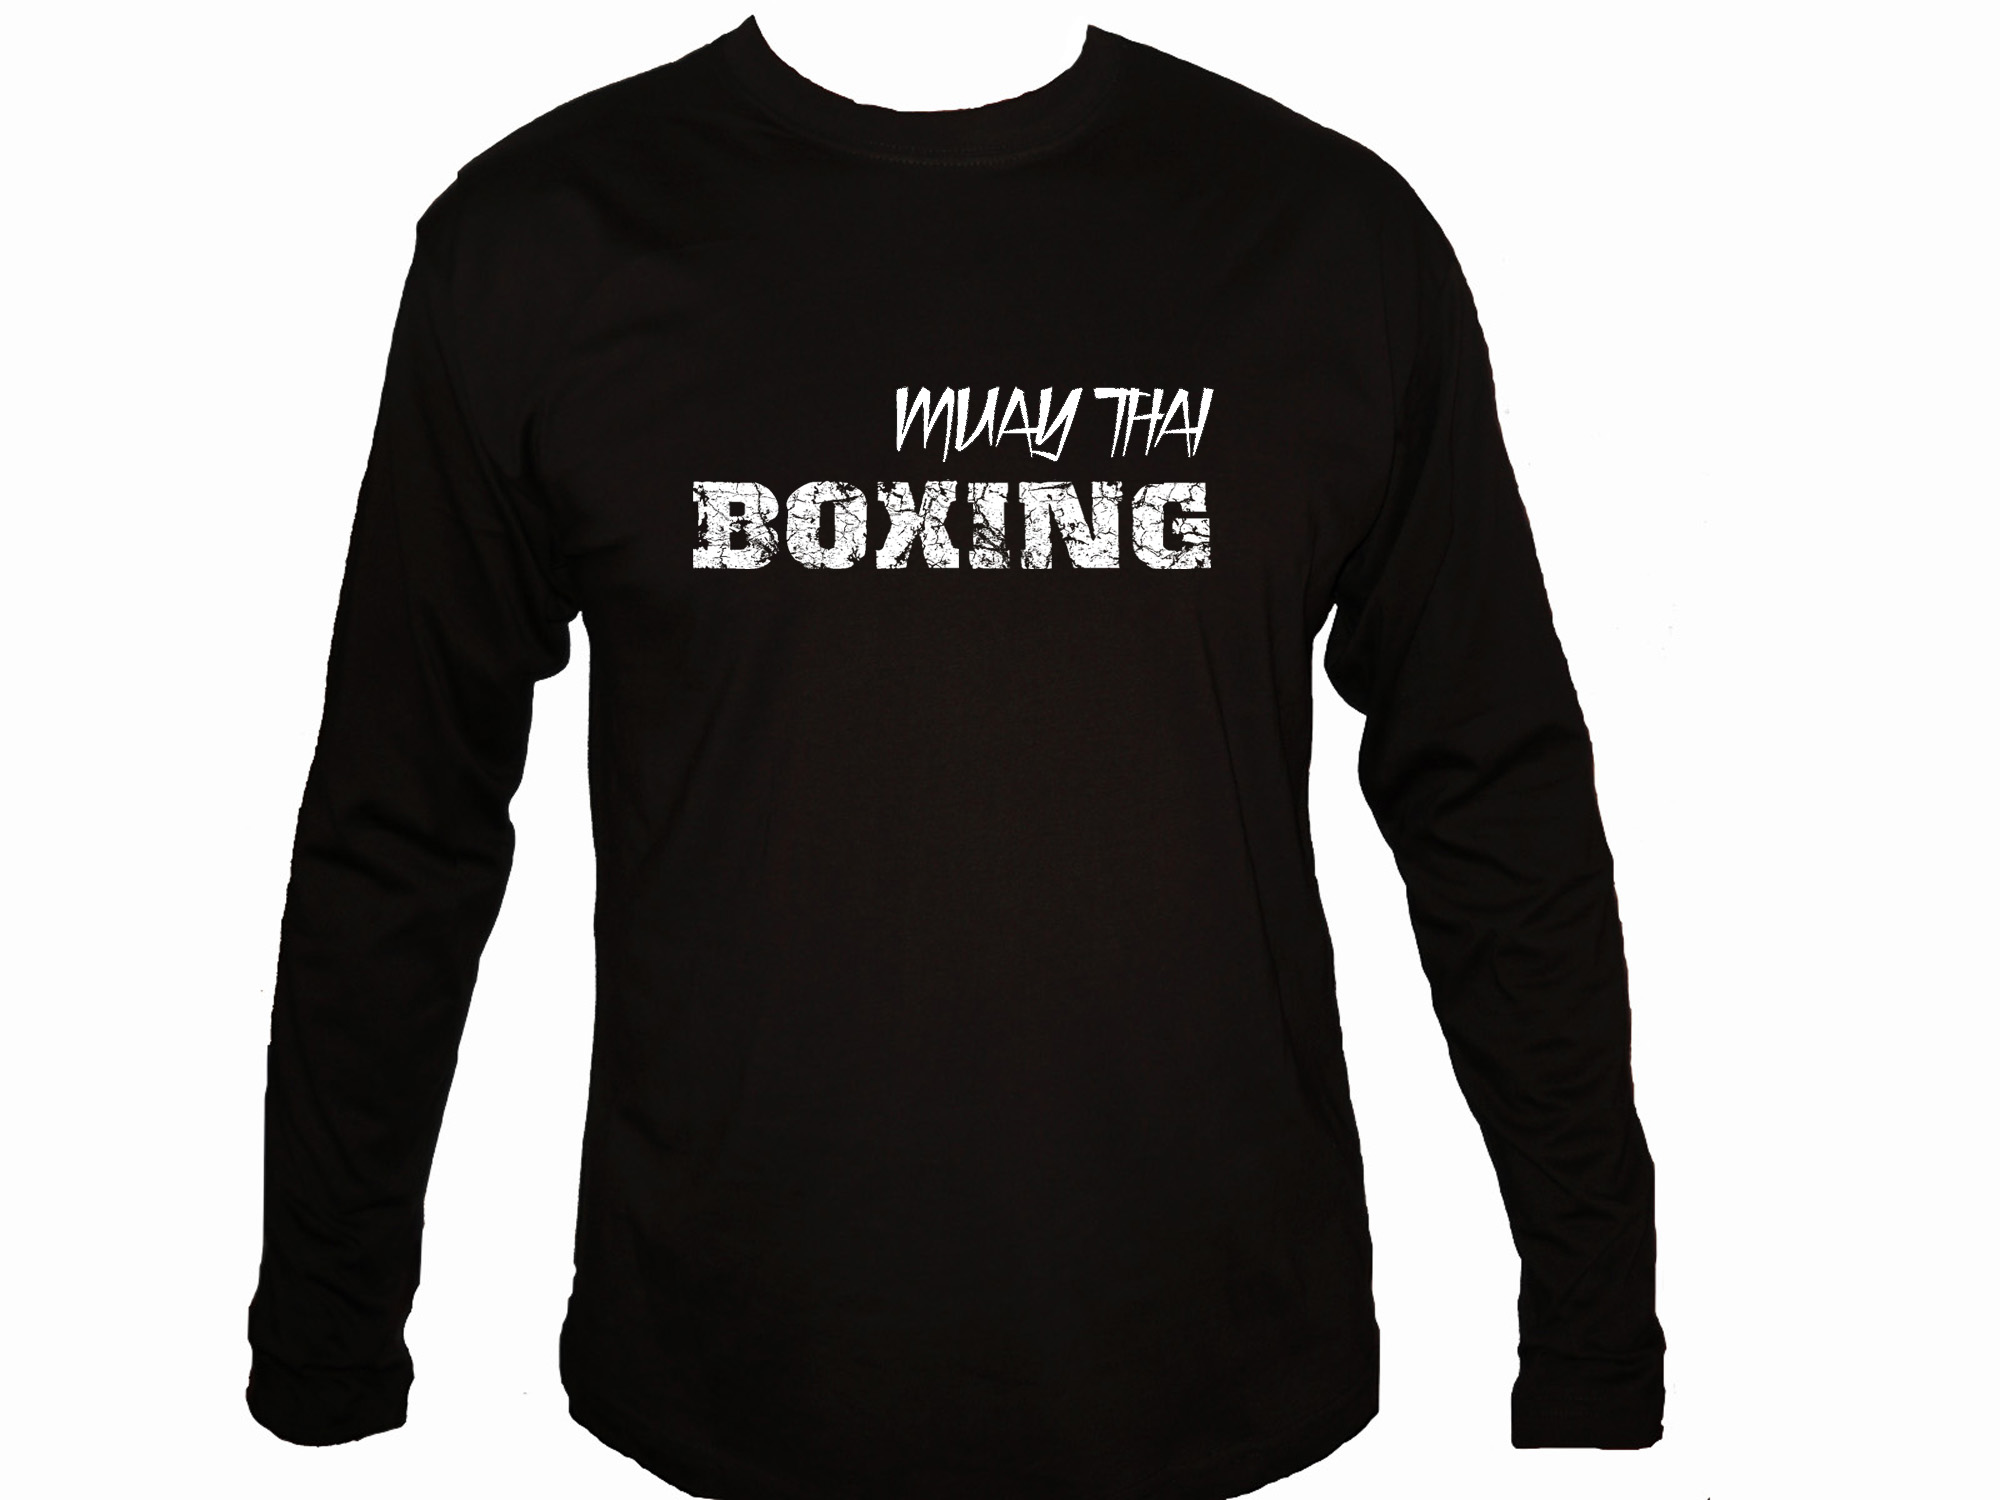 Muay Thai boxing distressed print long sleeves t-shirt